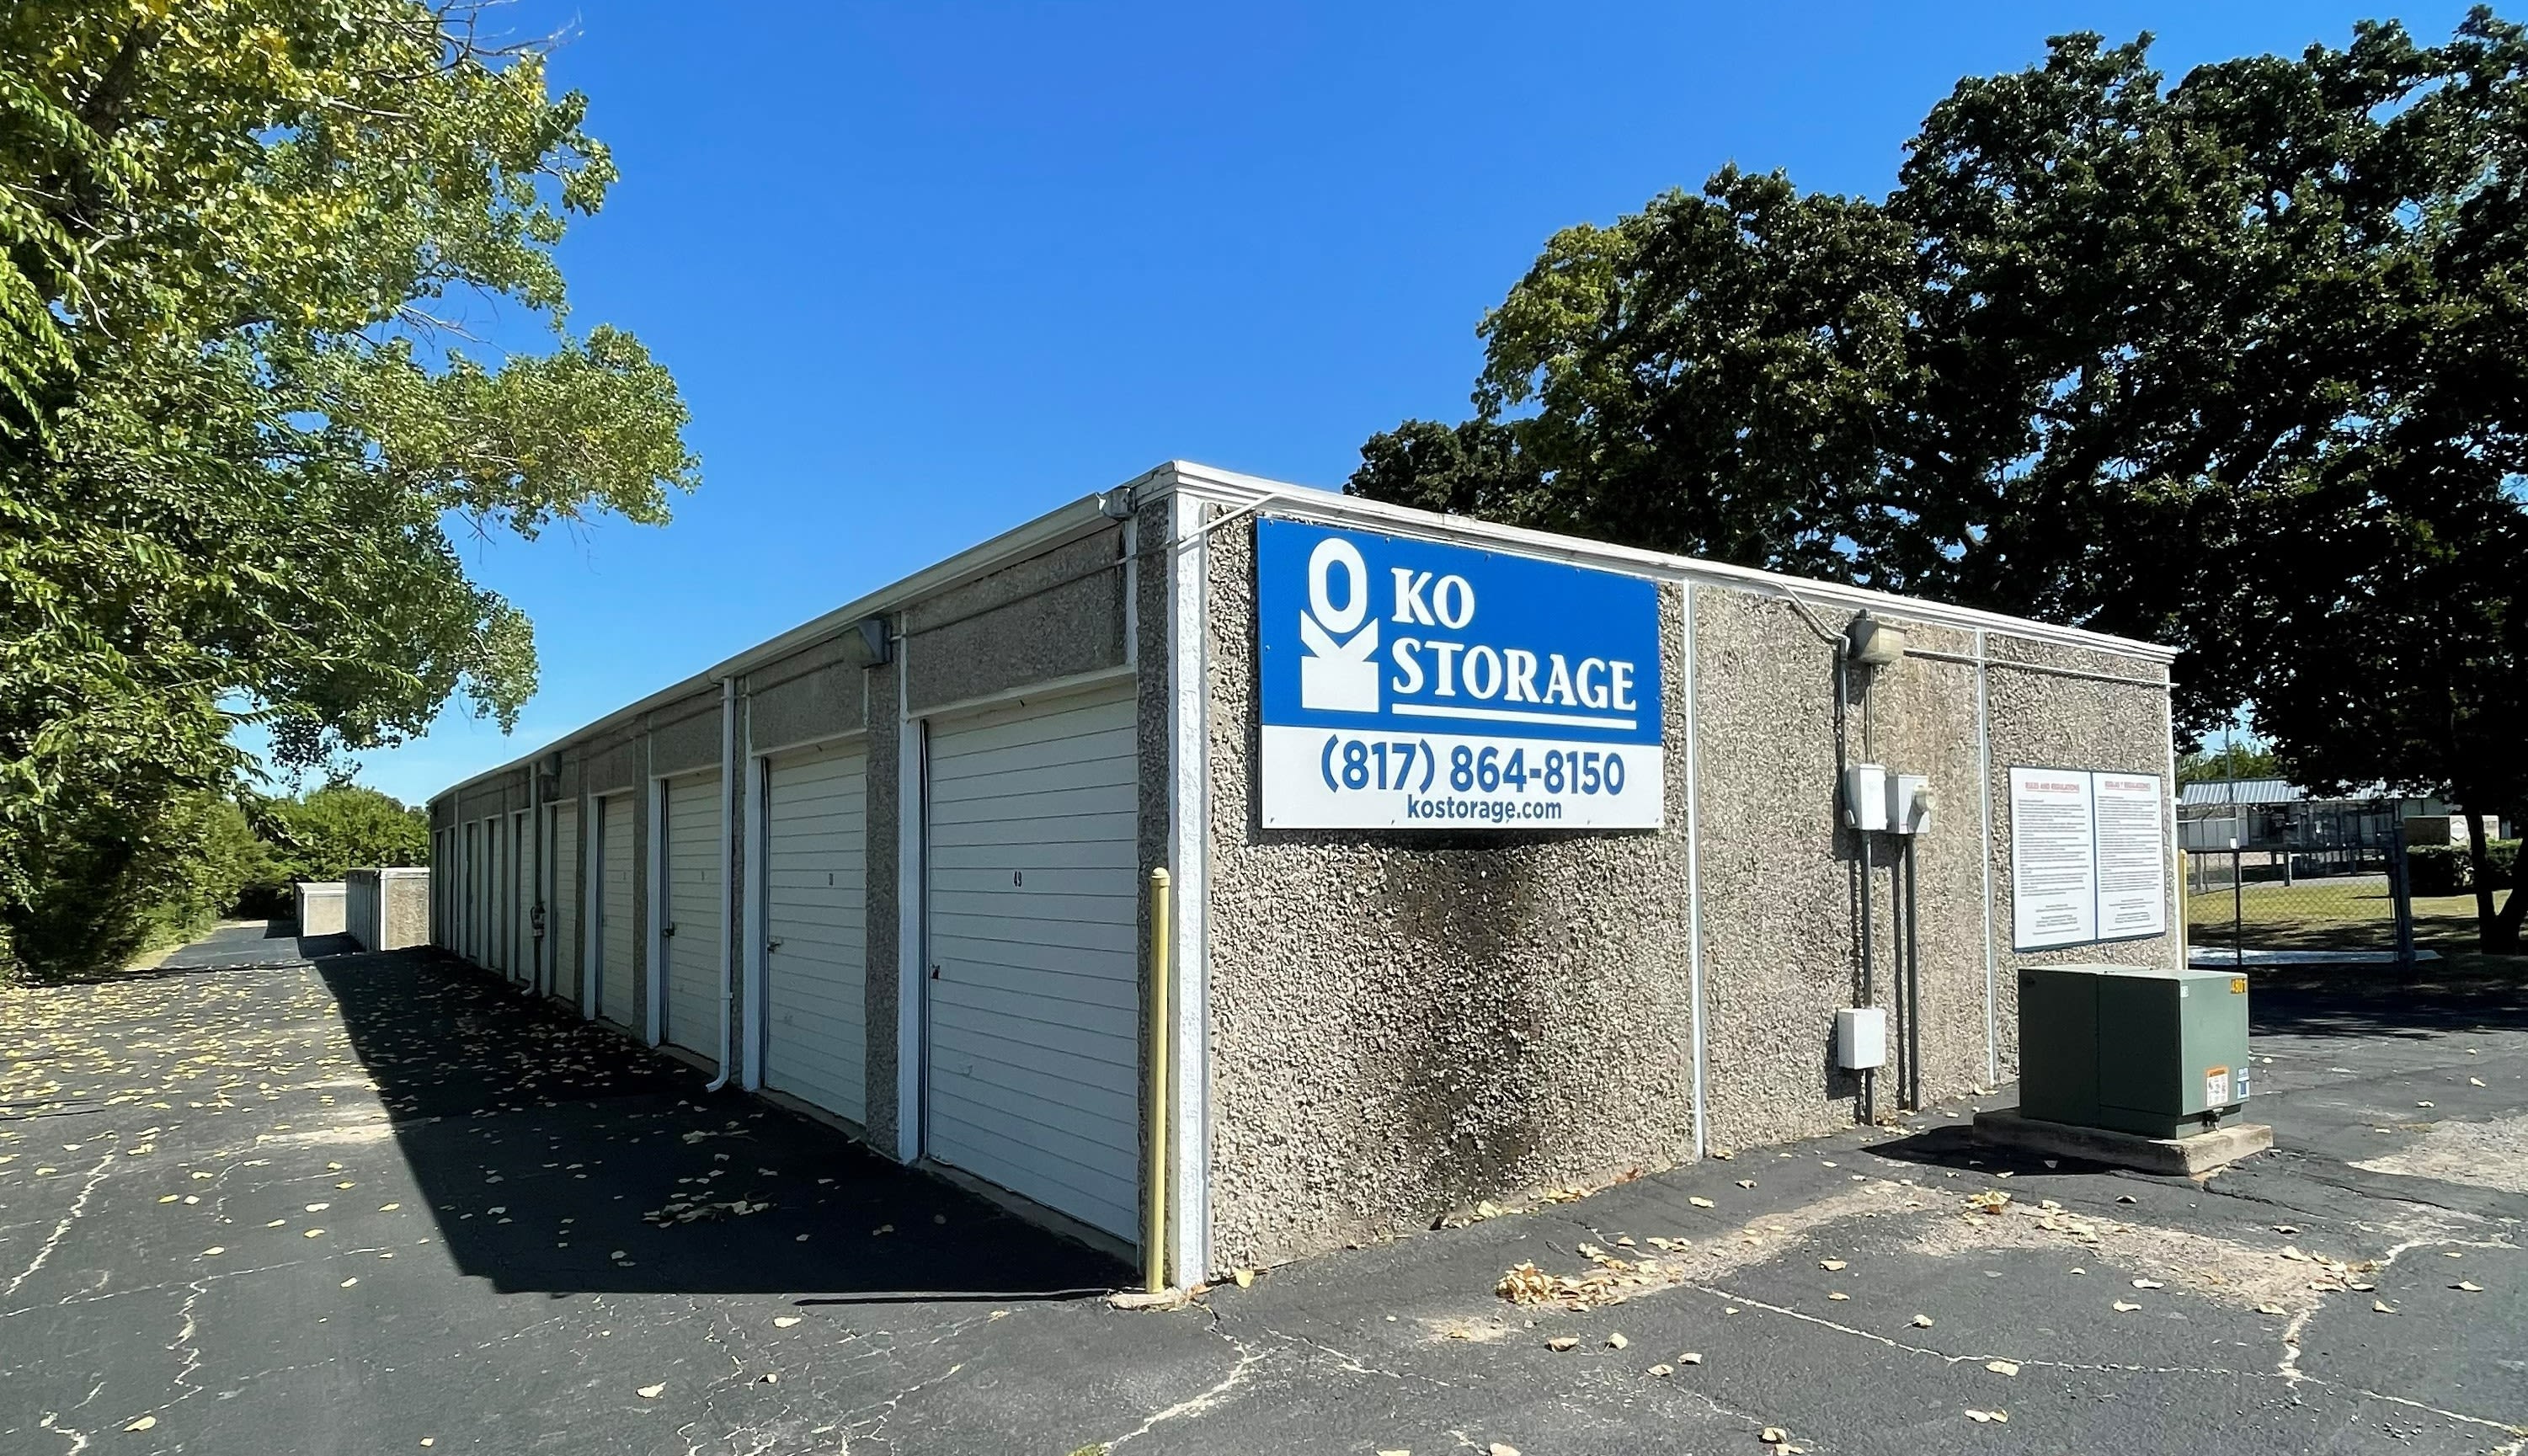 Reviews of KO Storage in Weatherford, Texas